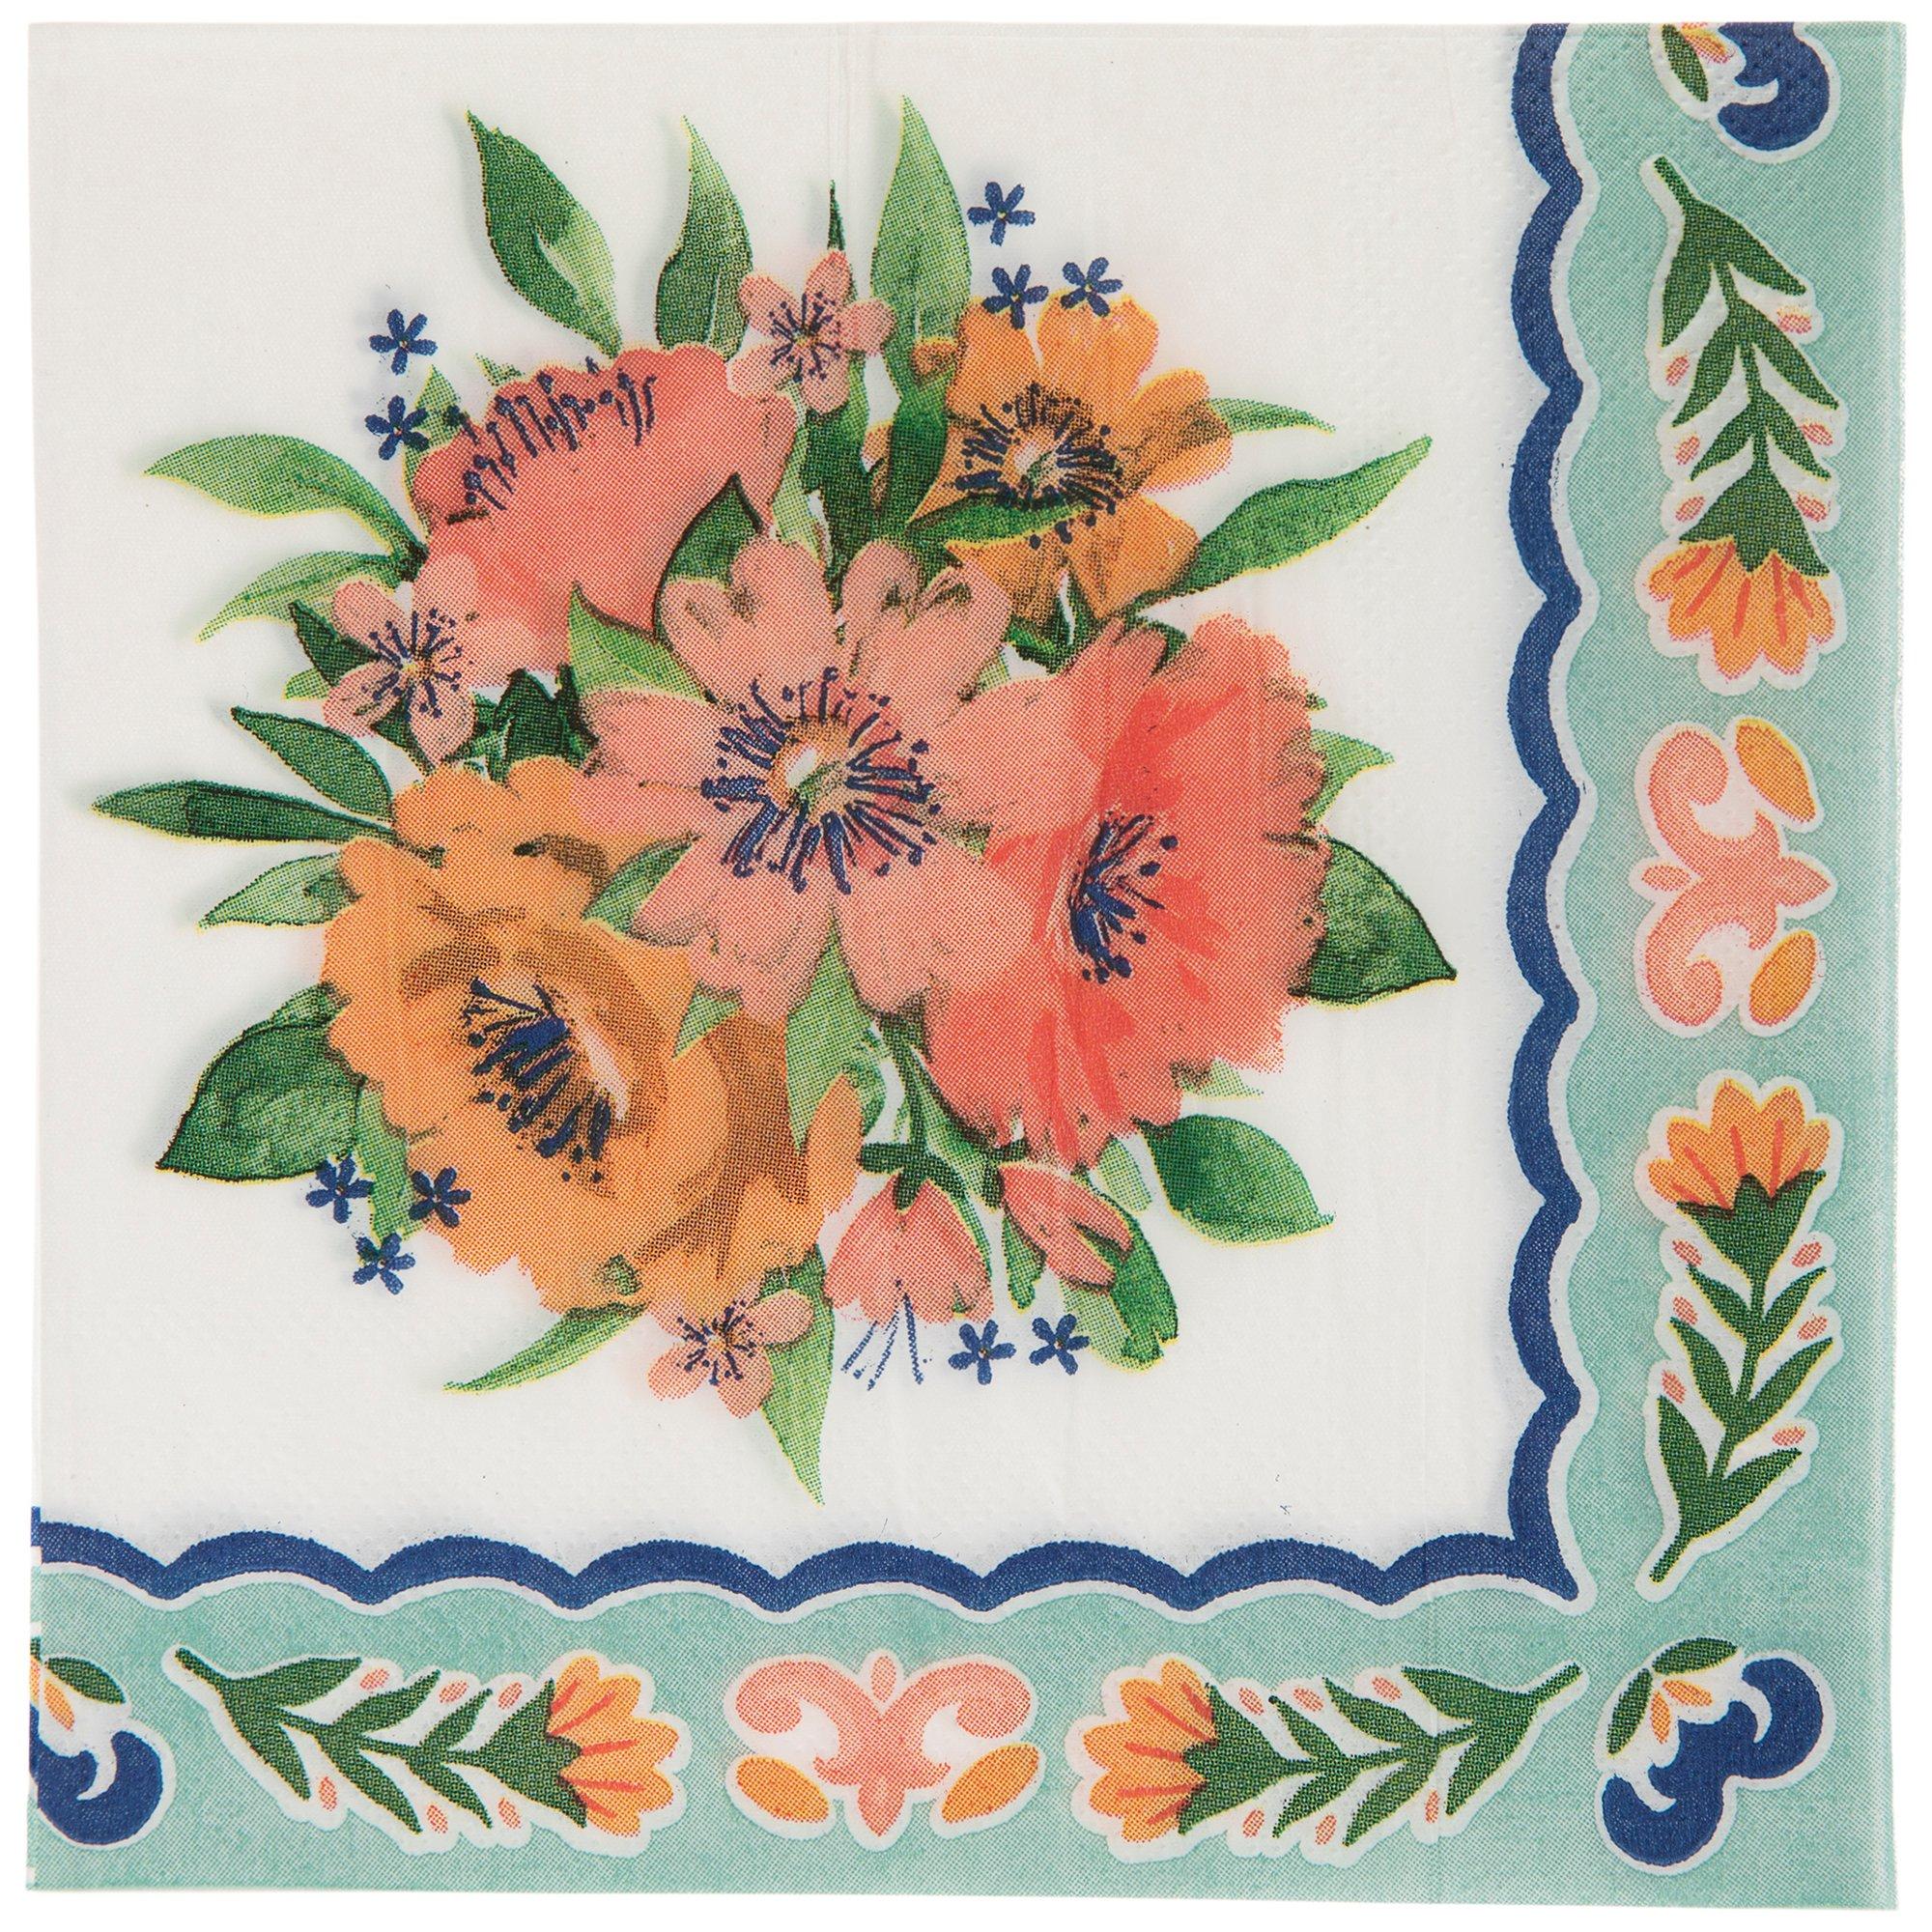 Boho Floral Paper Plates - Large, Hobby Lobby